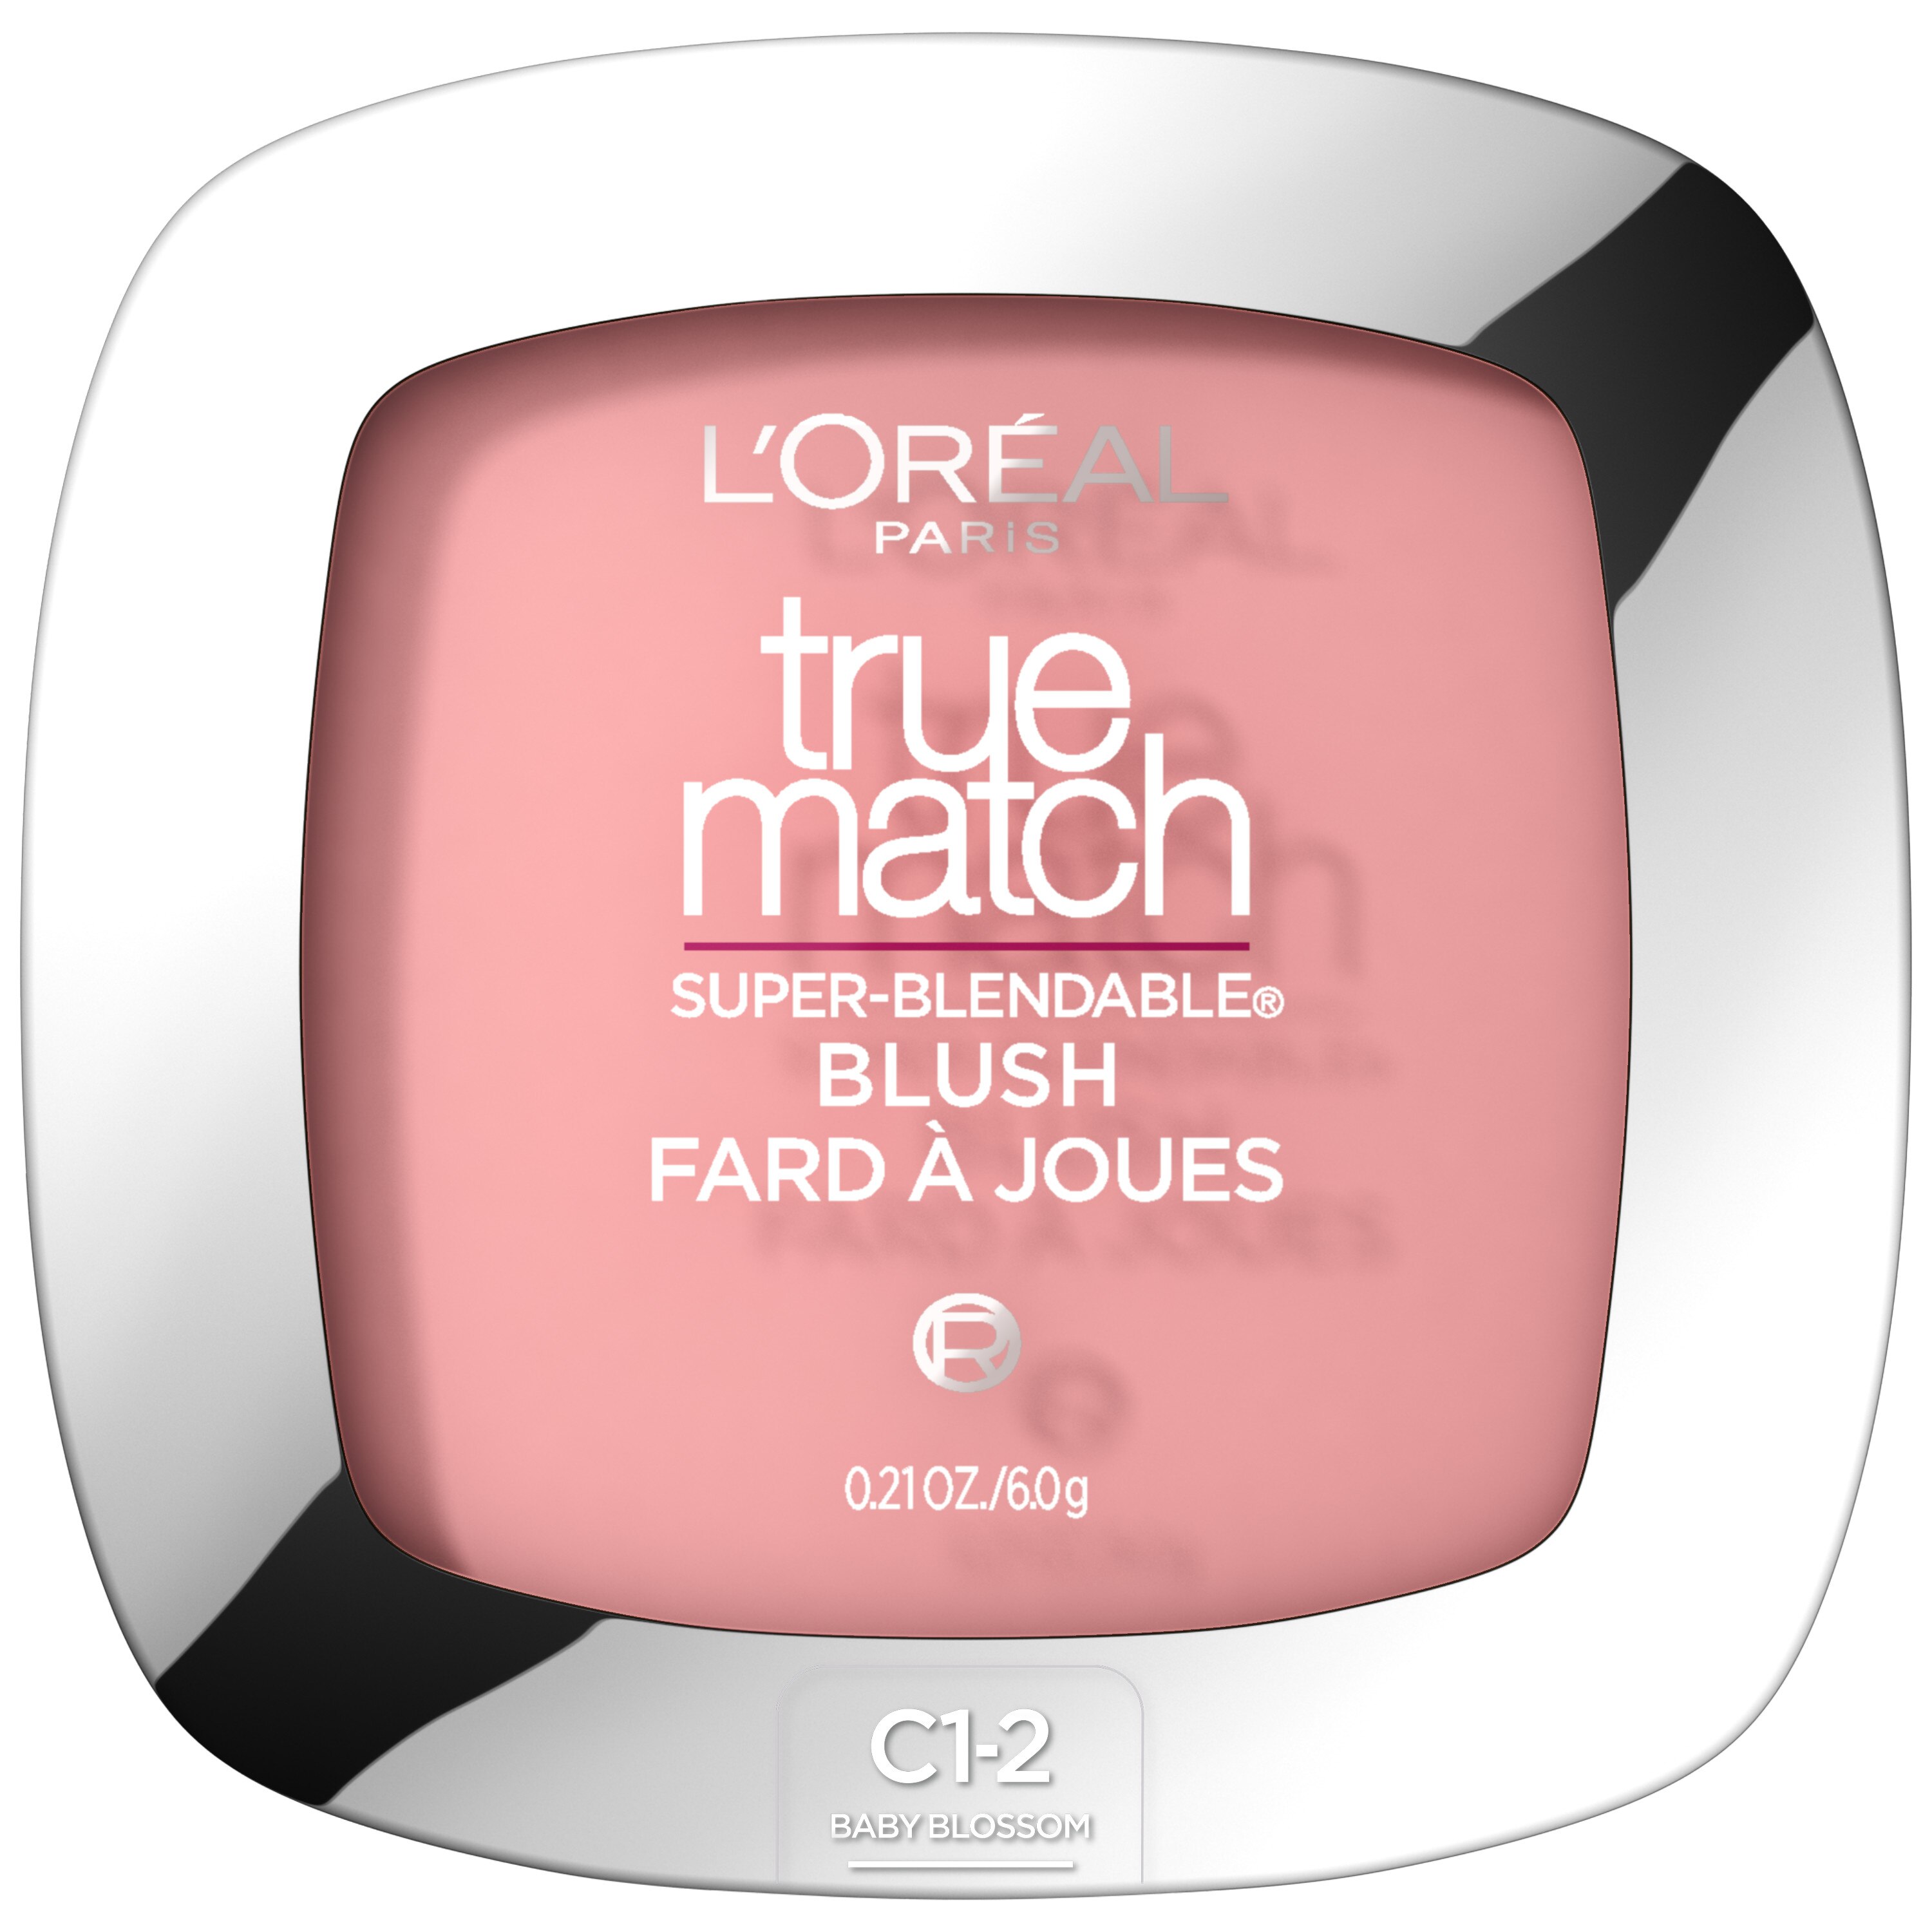 L'Oreal Paris True Match Super-Blendable Blush, C1-2 Baby Blossom , CVS